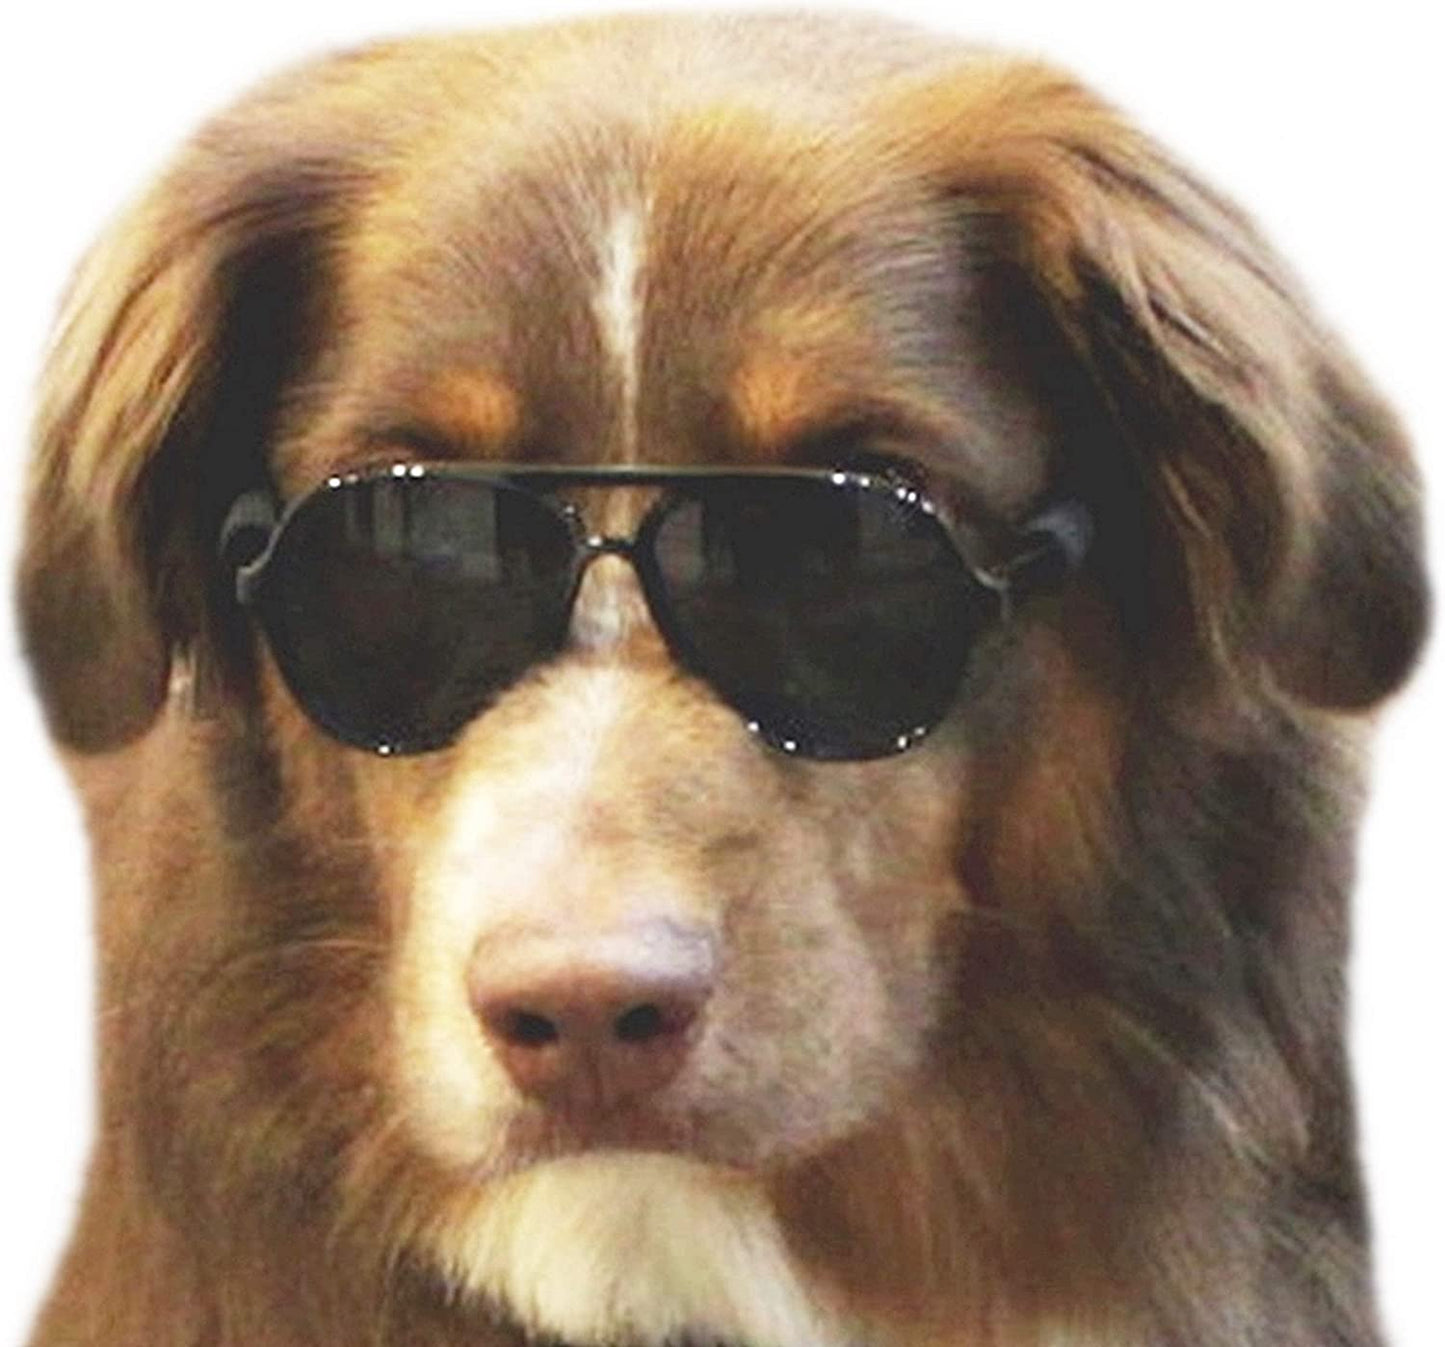 Pet Costume Prop Aviator Sunglasses Medium Breeds 20-40 lbs